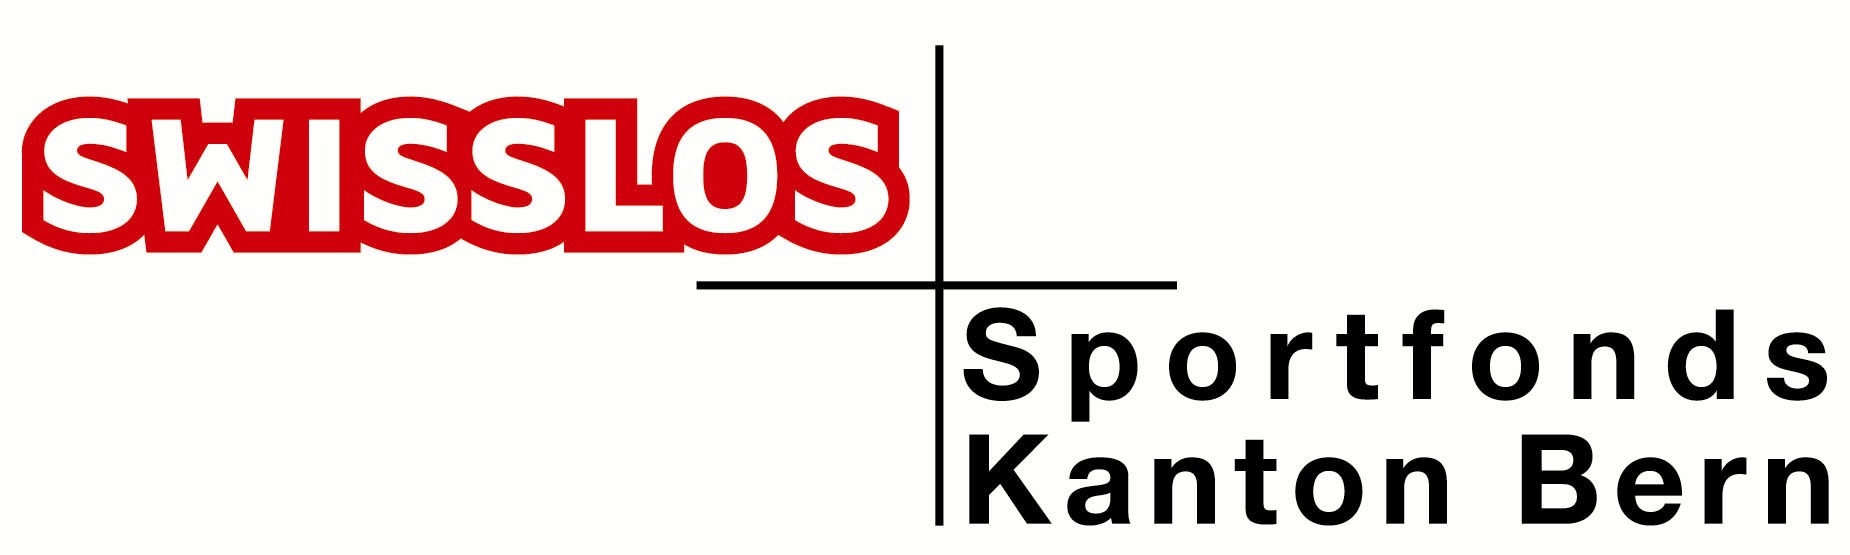 Logo Sportfonds farbig jpgjpg